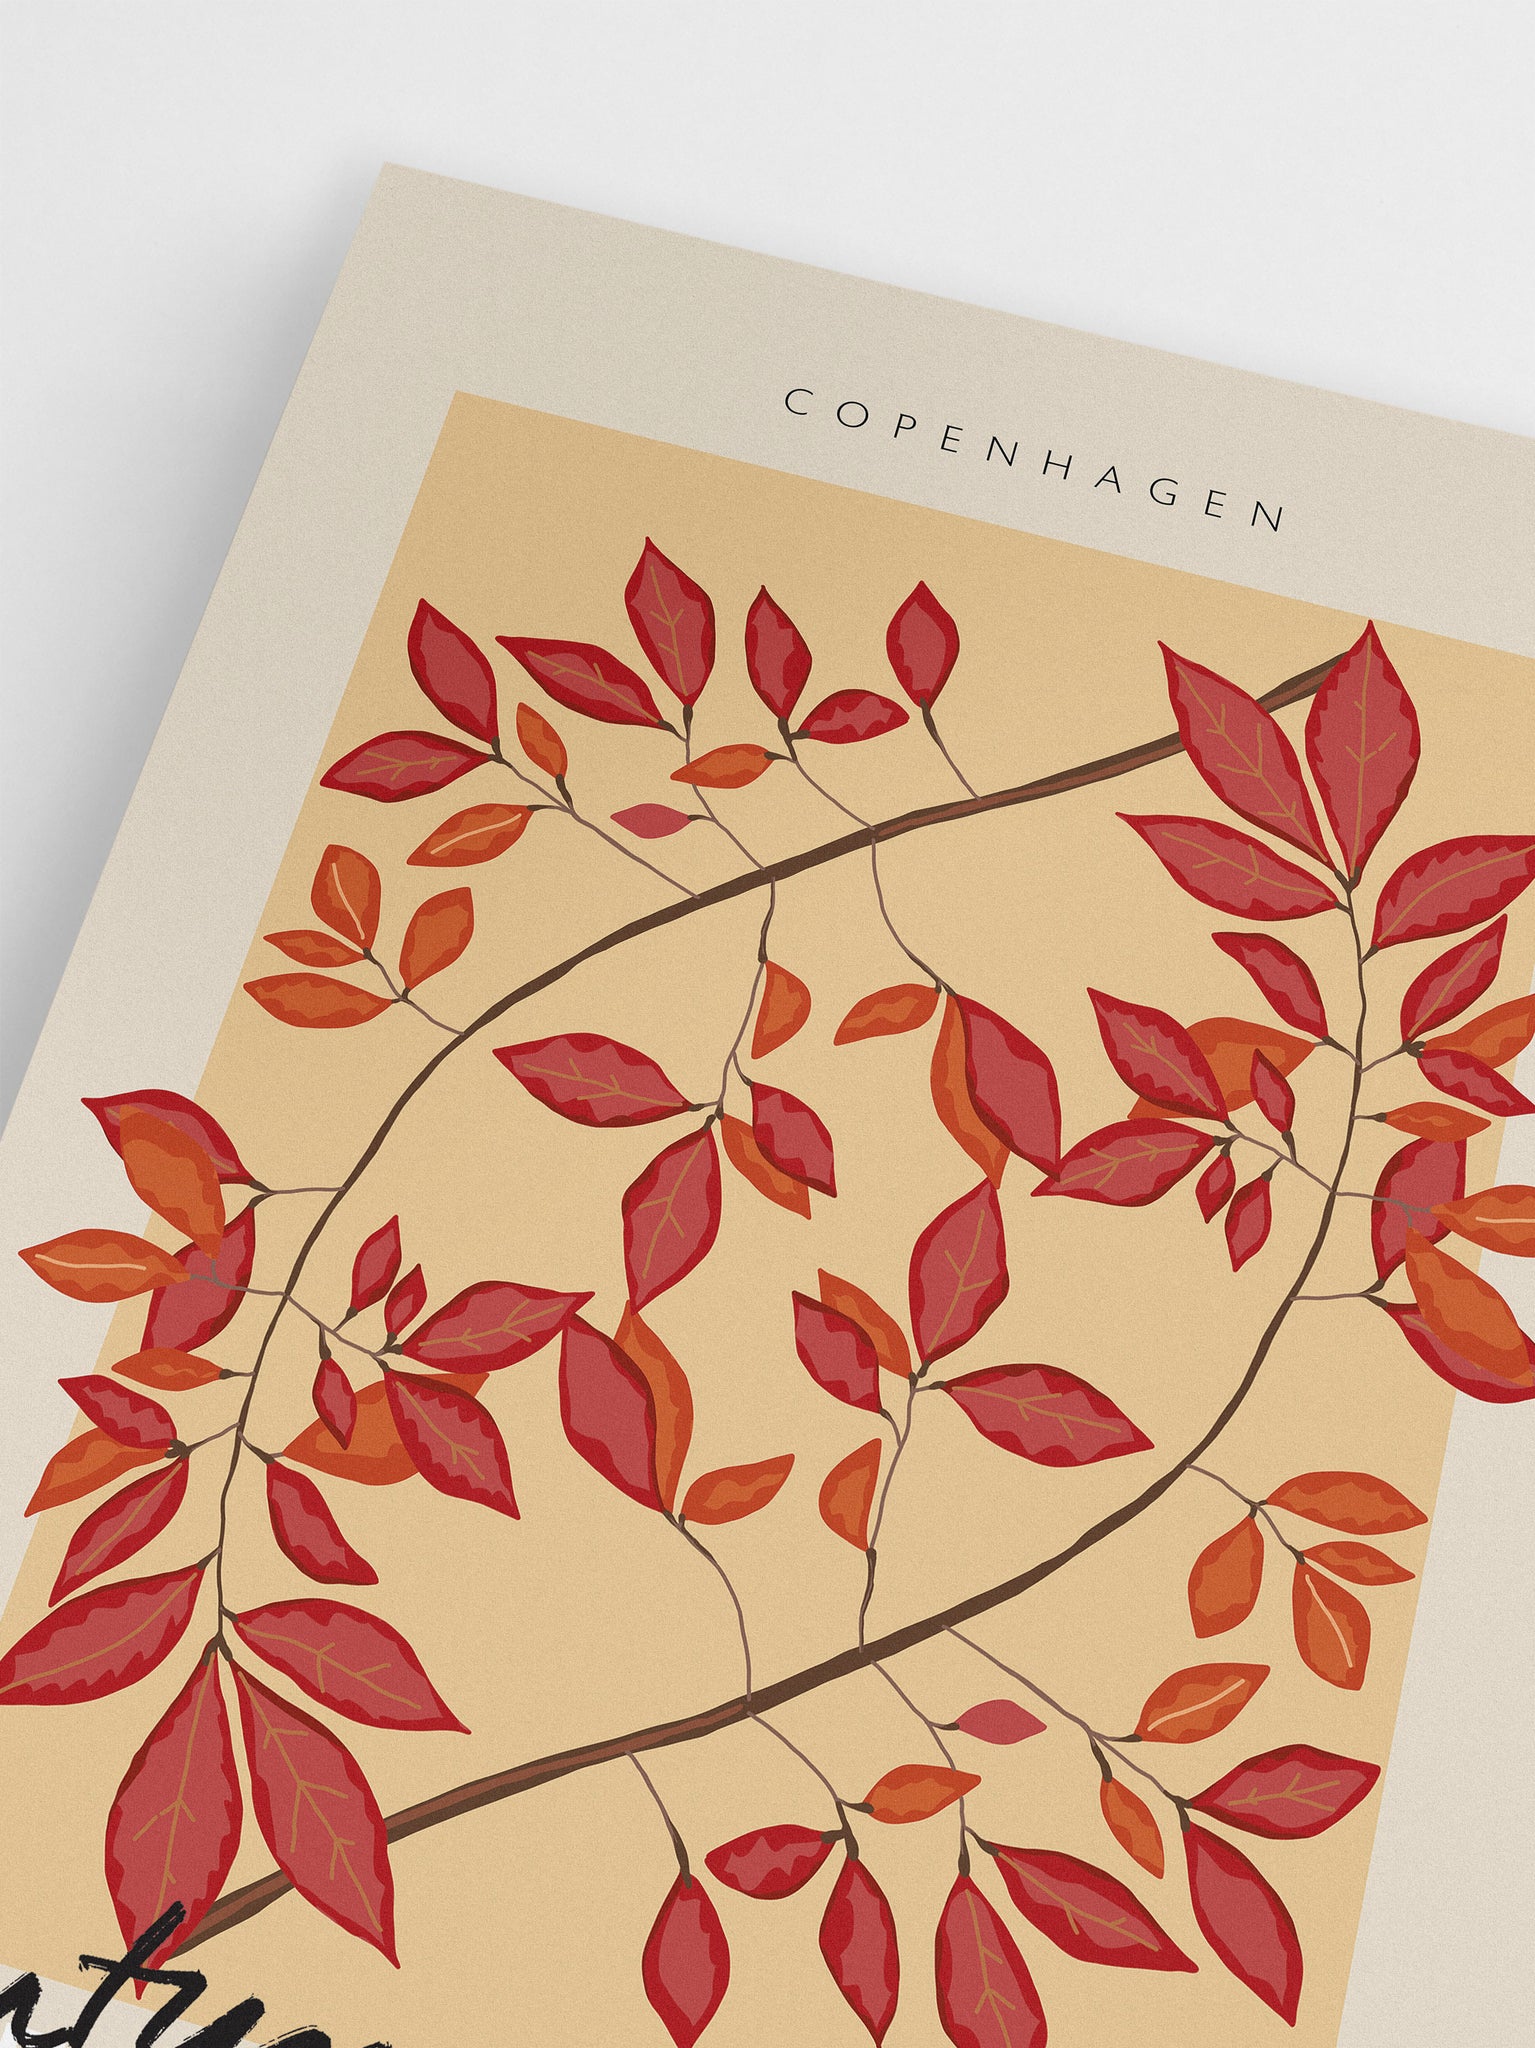 Autumn Gallery: Copenhagen Poster